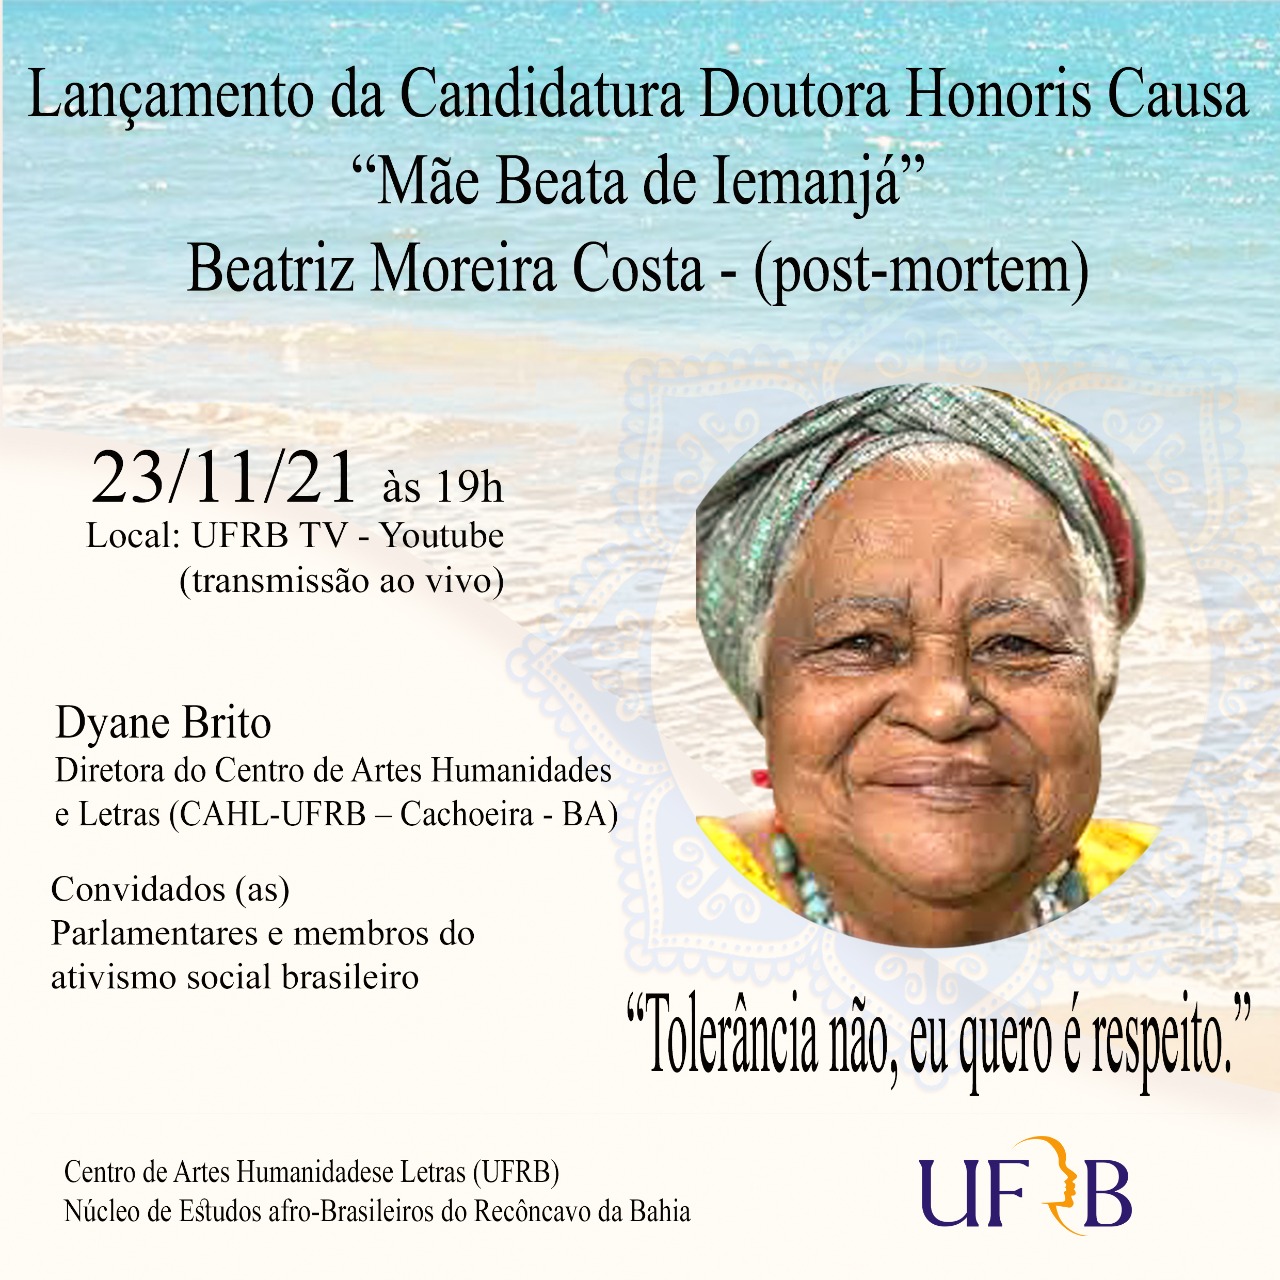 Lançamento Candidatura Doutora Honoris Causa Mãe Beata de iemanjá Beatriz Moreira Costa